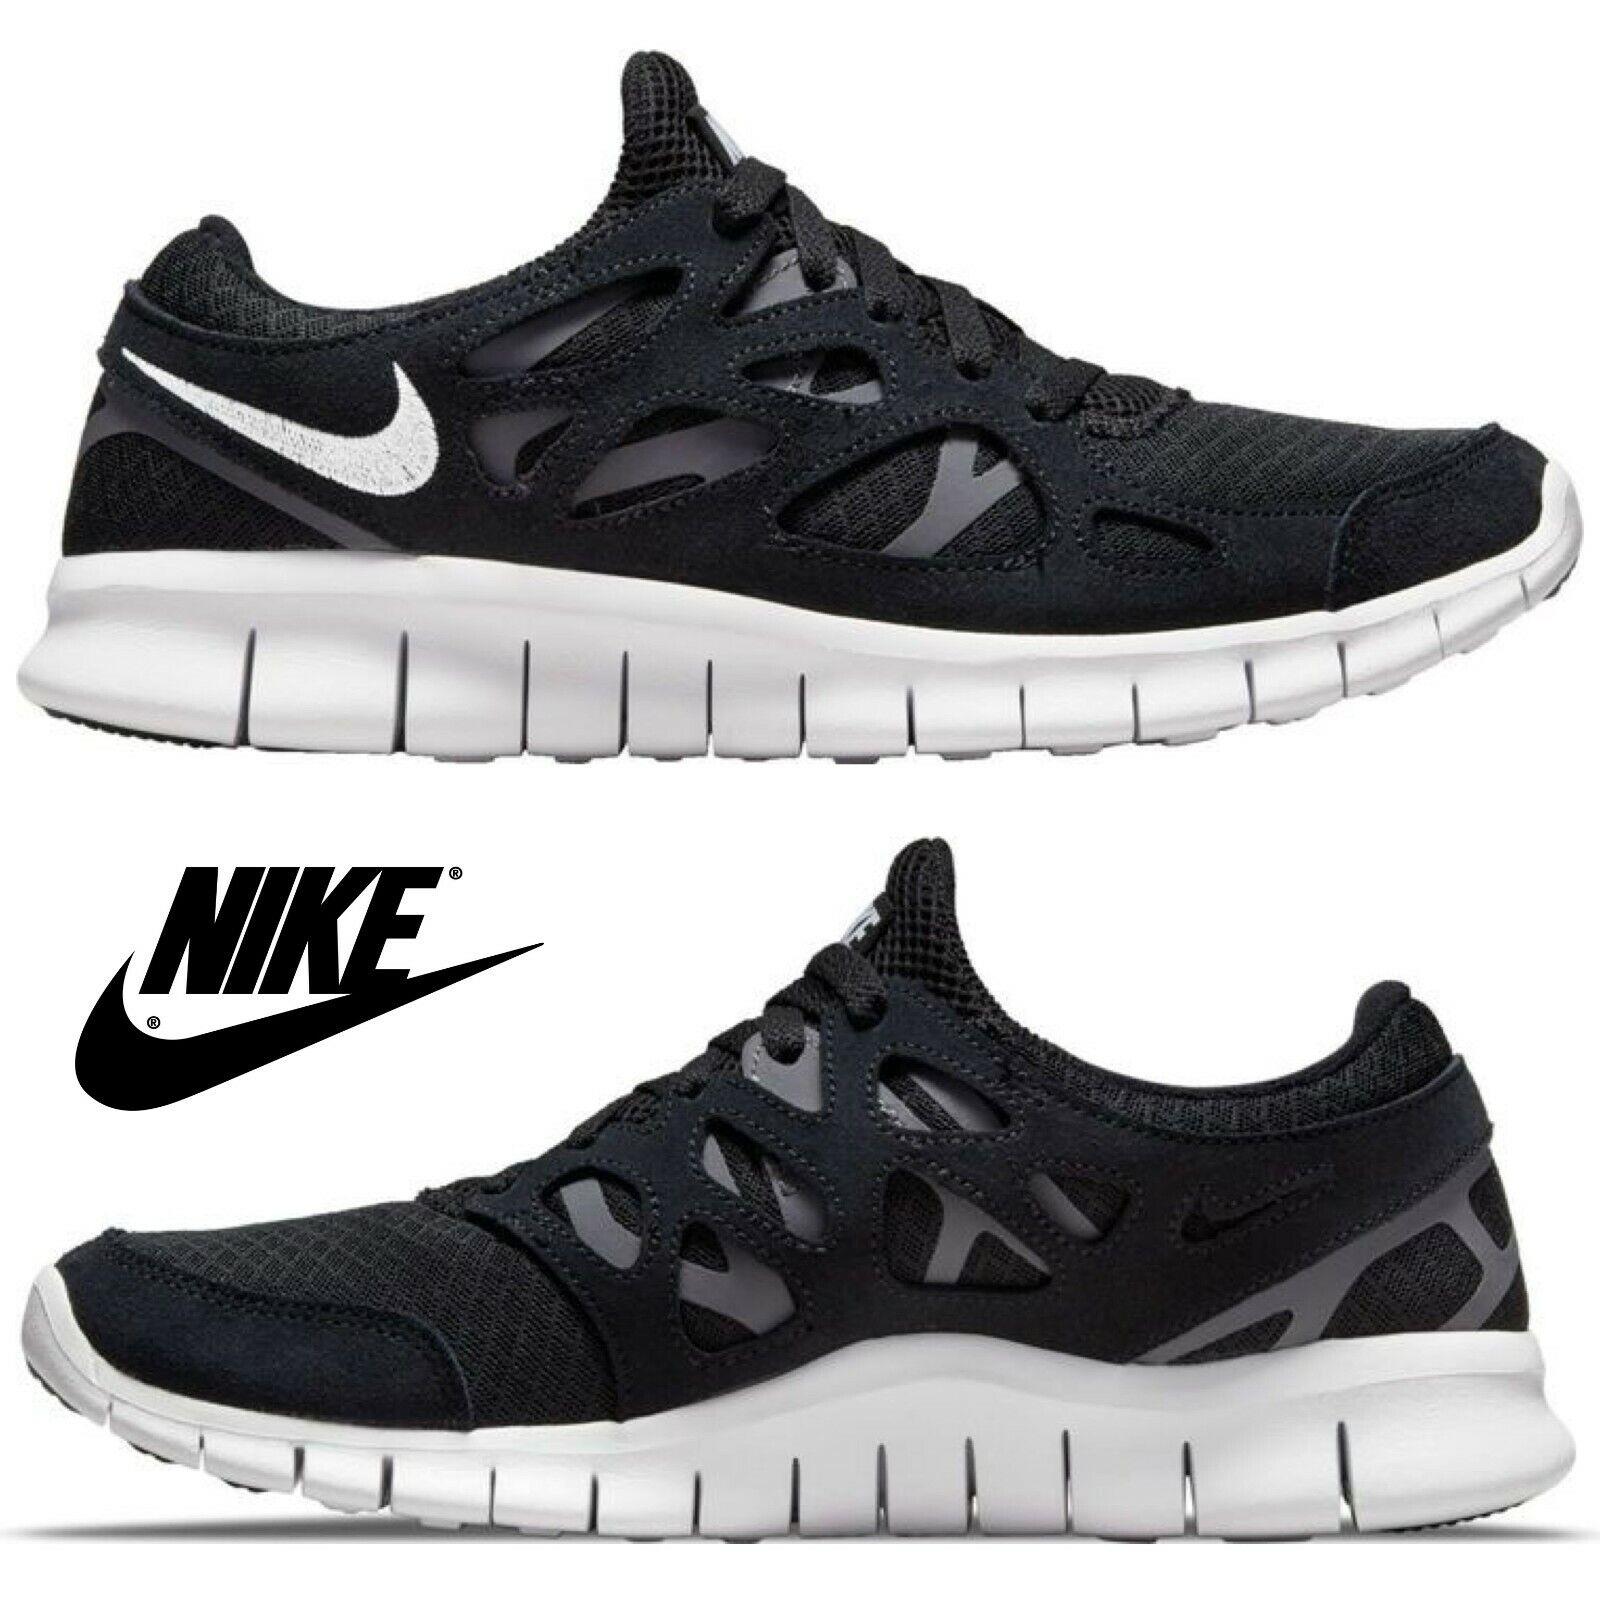 Nike Women`s Free Run 2 Shoes Casual Premium Running Sneakers Sport Gym Black - Black , BLACK/WHITE/DARK GREY Manufacturer